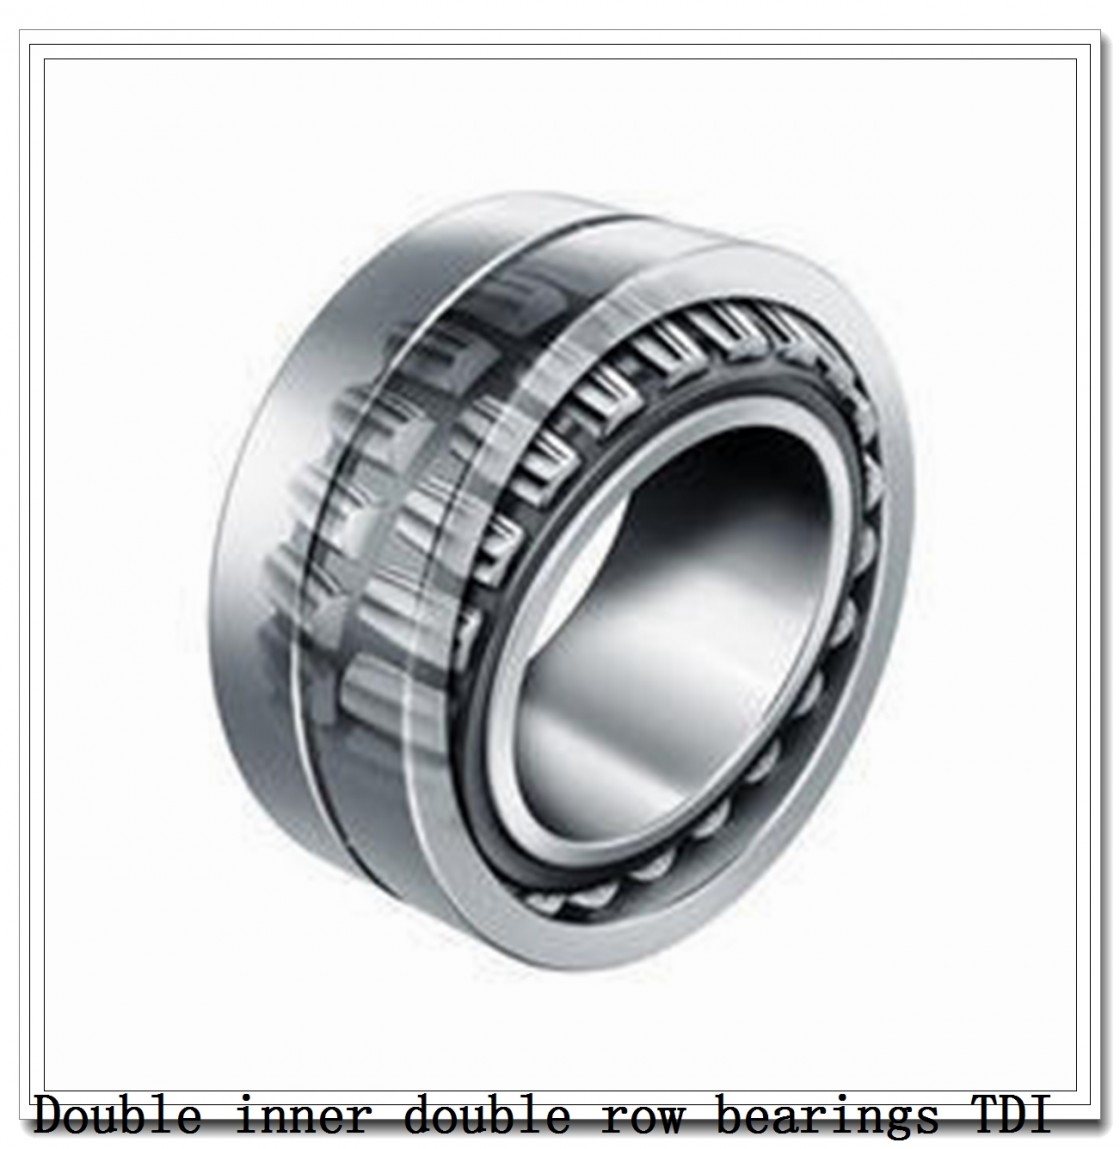 140TDO225-3 Double inner double row bearings TDI